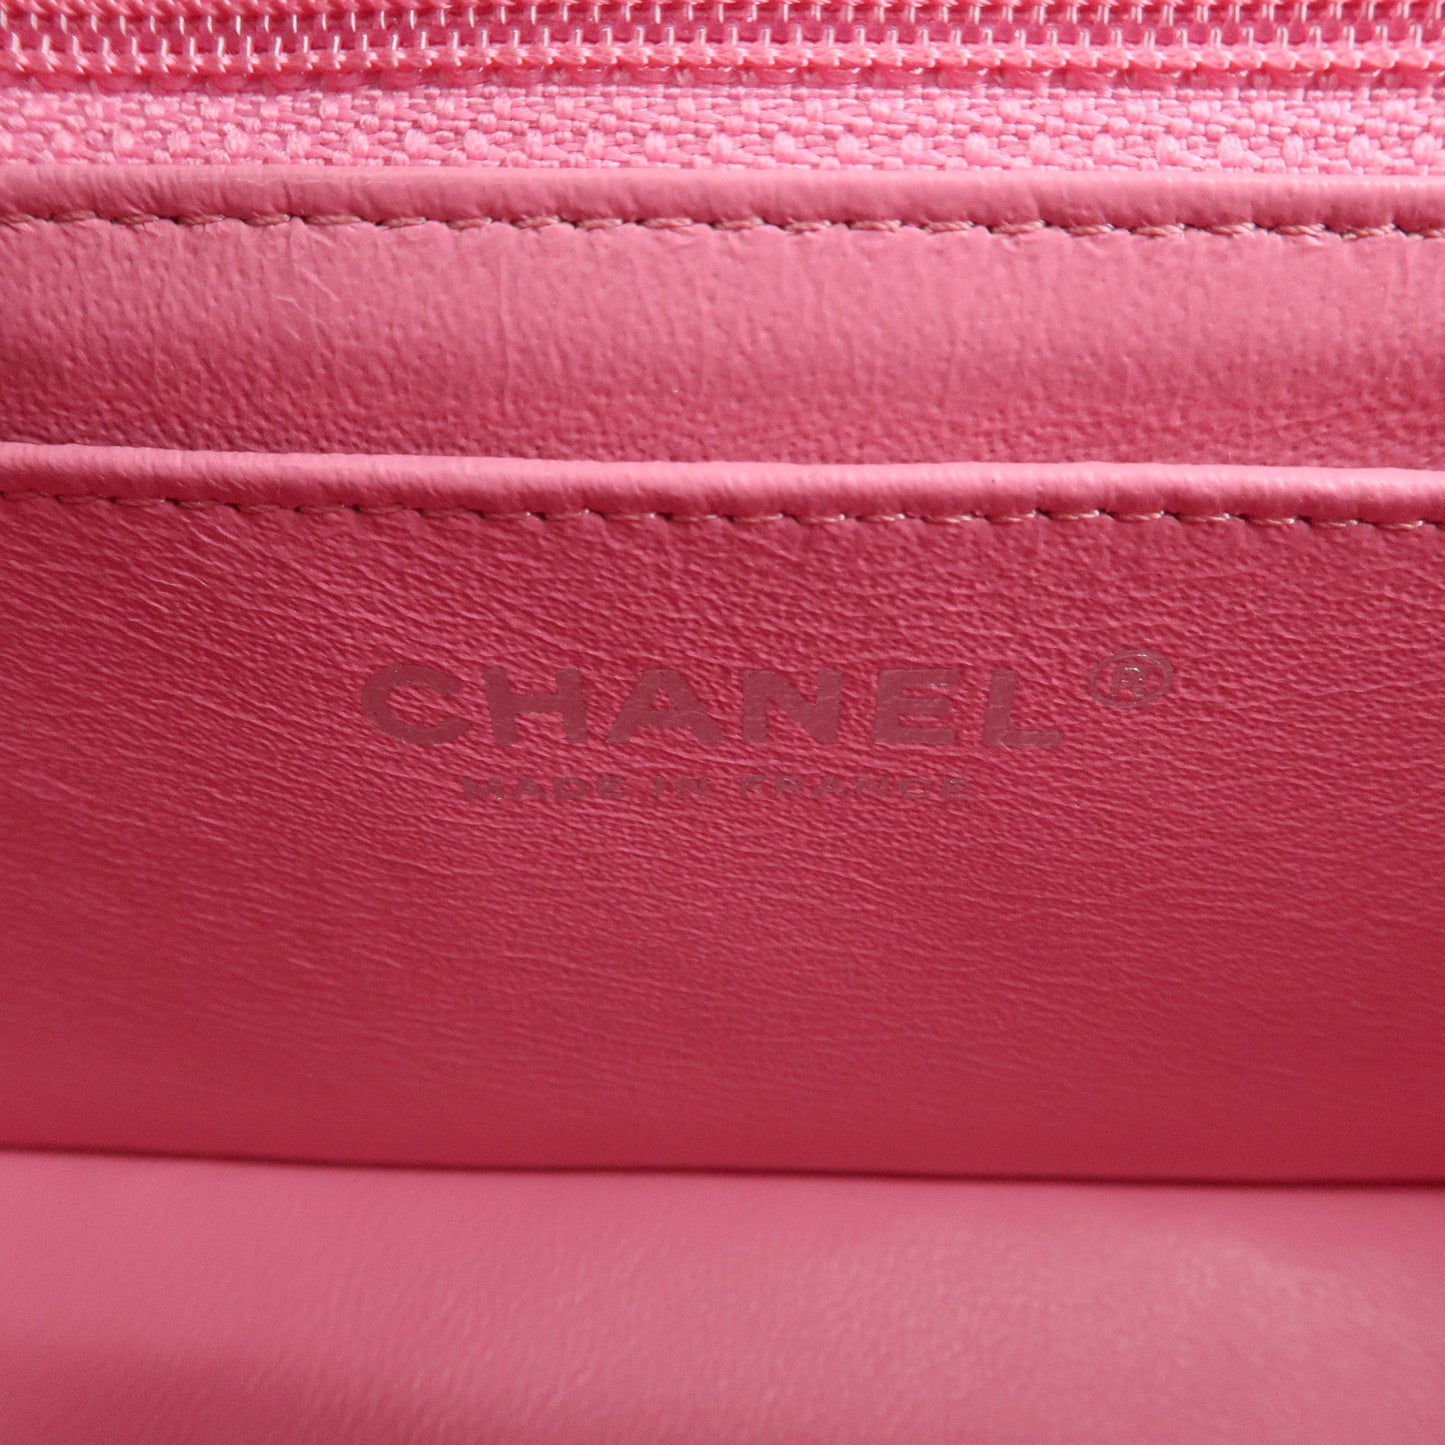 CHANEL Mini Matelasse 20 Lamb Skin Chain Shoulder Bag Pink A69900